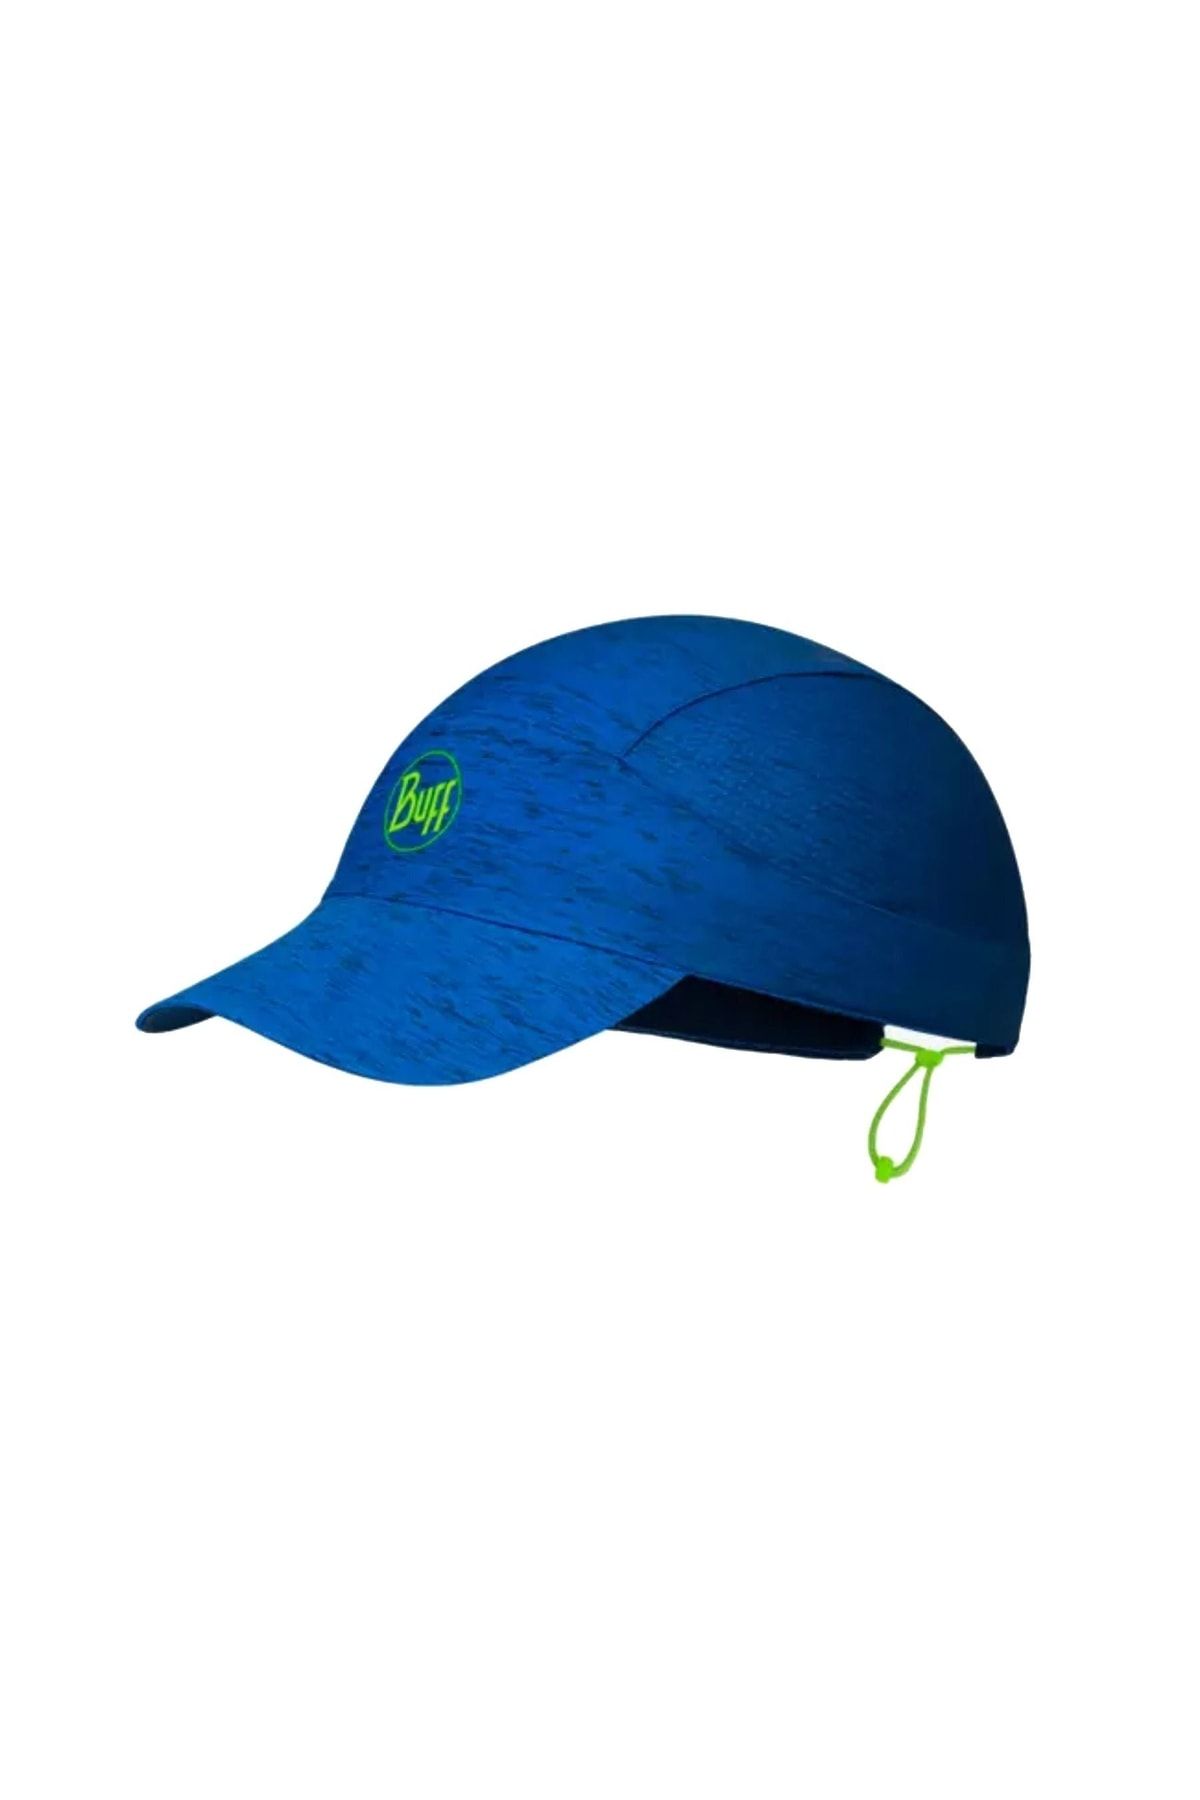 Buff ® Pack Speed Cap Htr Azure Blue S/M Şapka